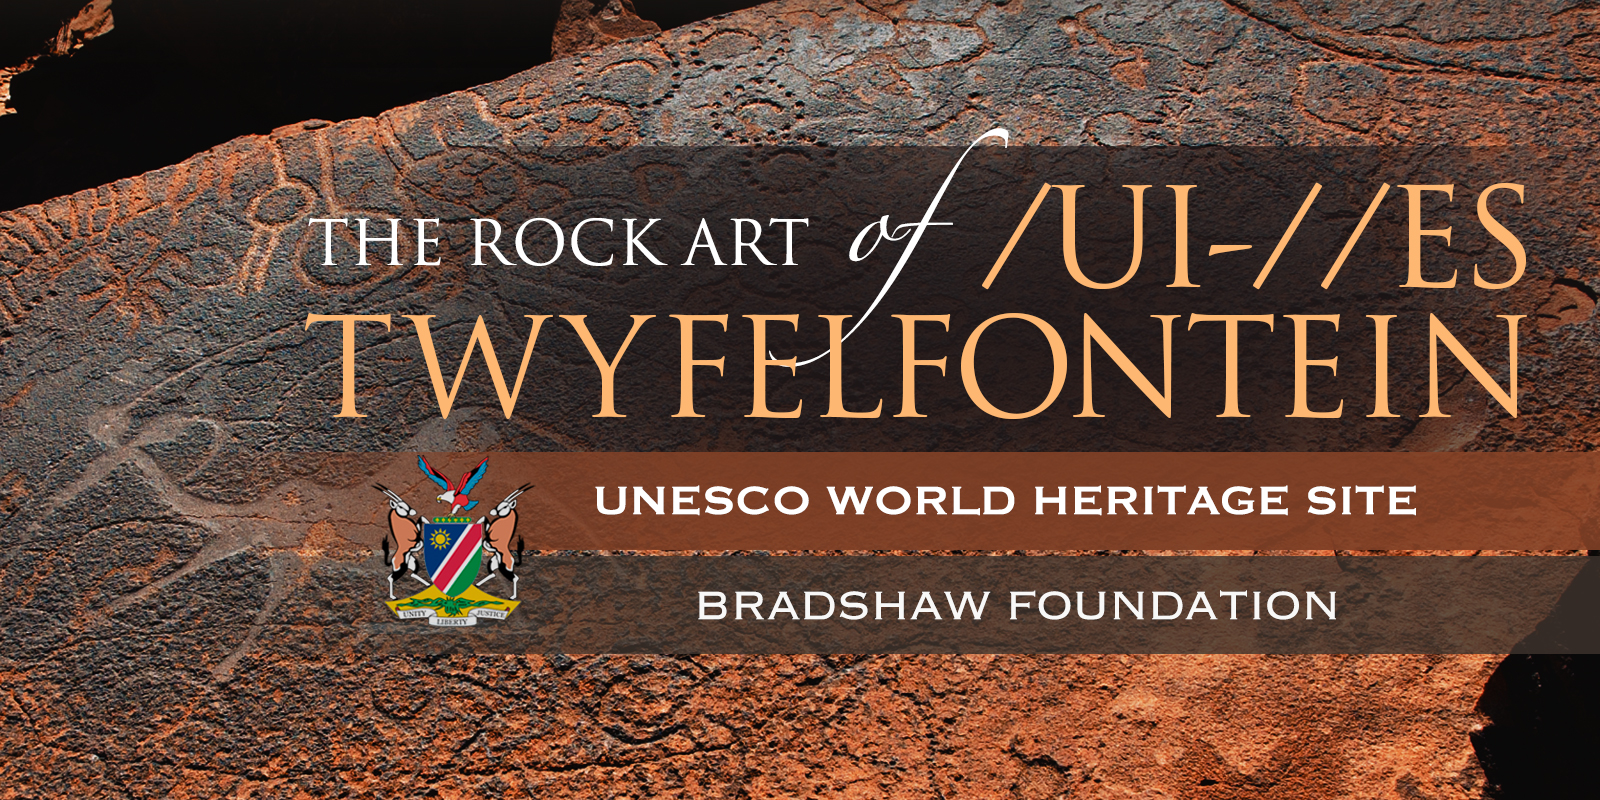 Rock Art Namibia Africa Petroglyph Petroglyphs Engravings Engraving Twyfelfontein /Ui- //aes UNESCO World Heritage Site Bradshaw Foundation Rock Art Network RAN